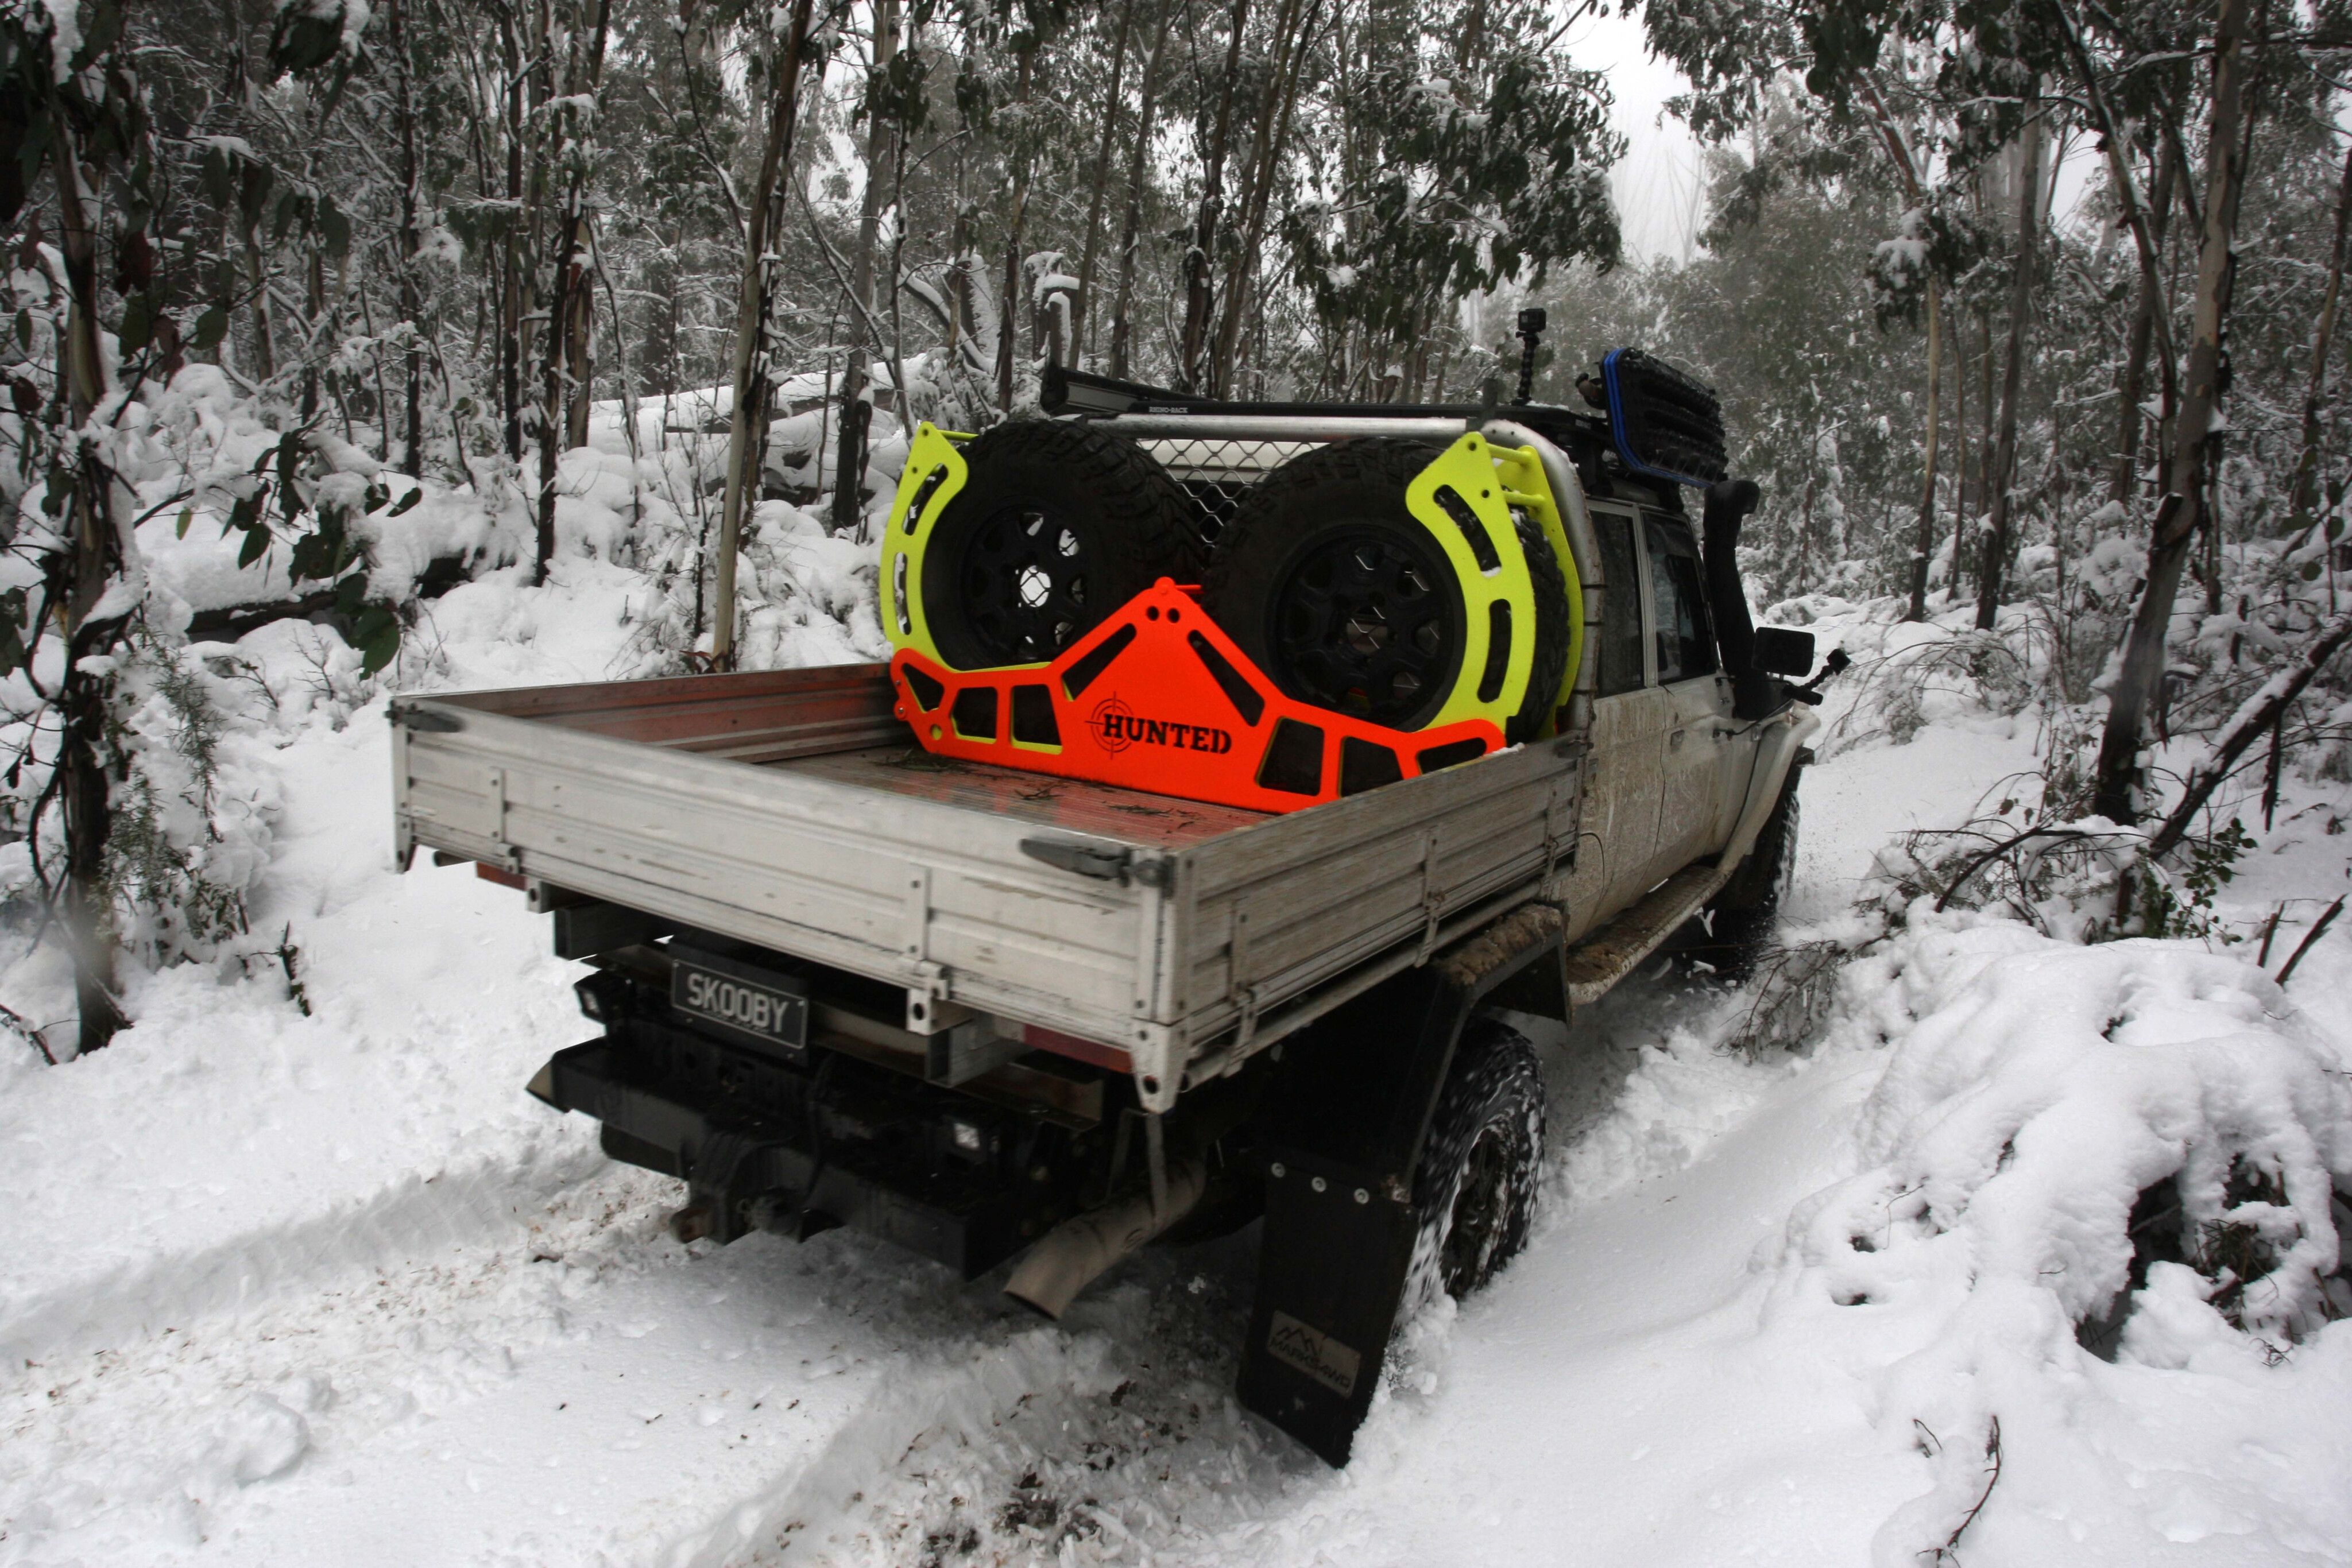 ec8e1908/snow driving techniques 4x4 australia 6s8w3227 jpg